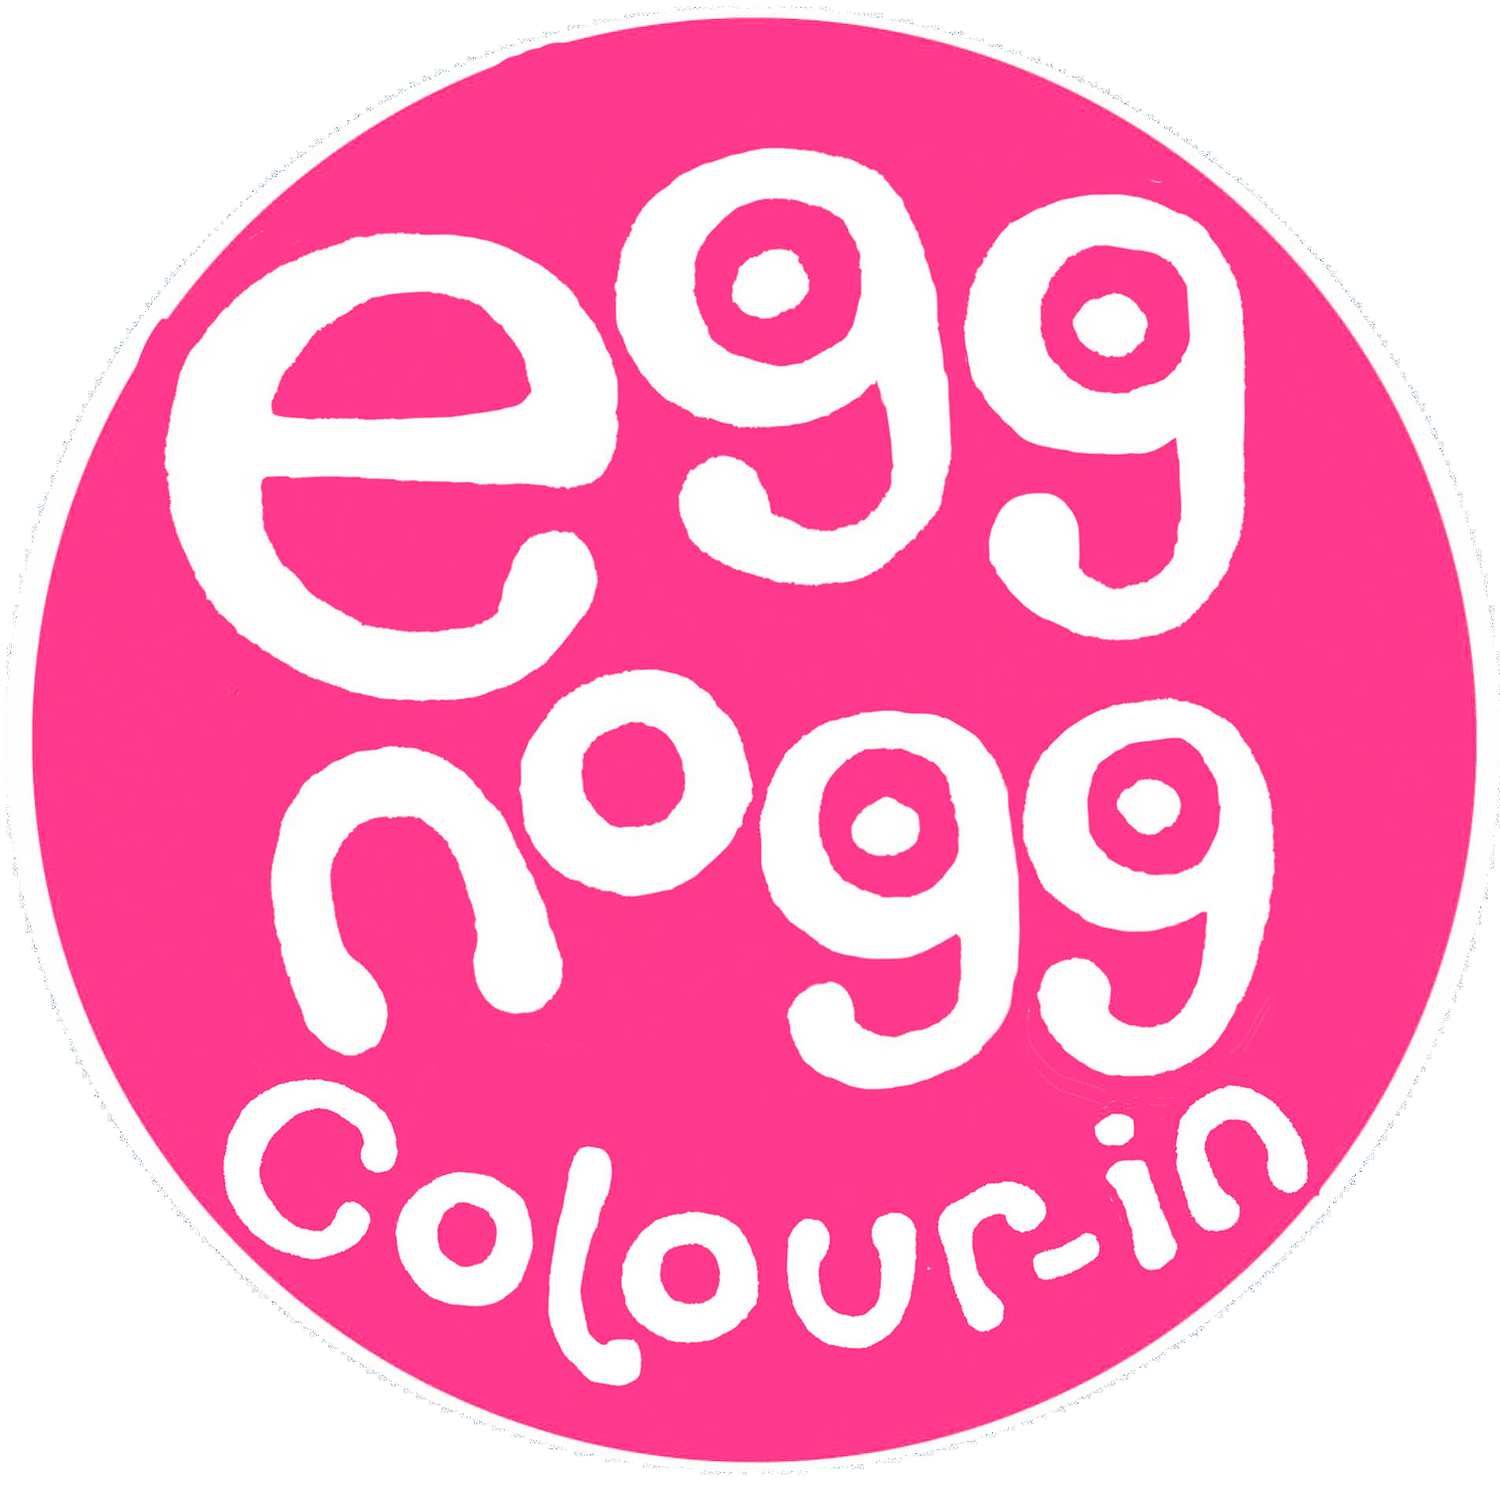 Eggnogg